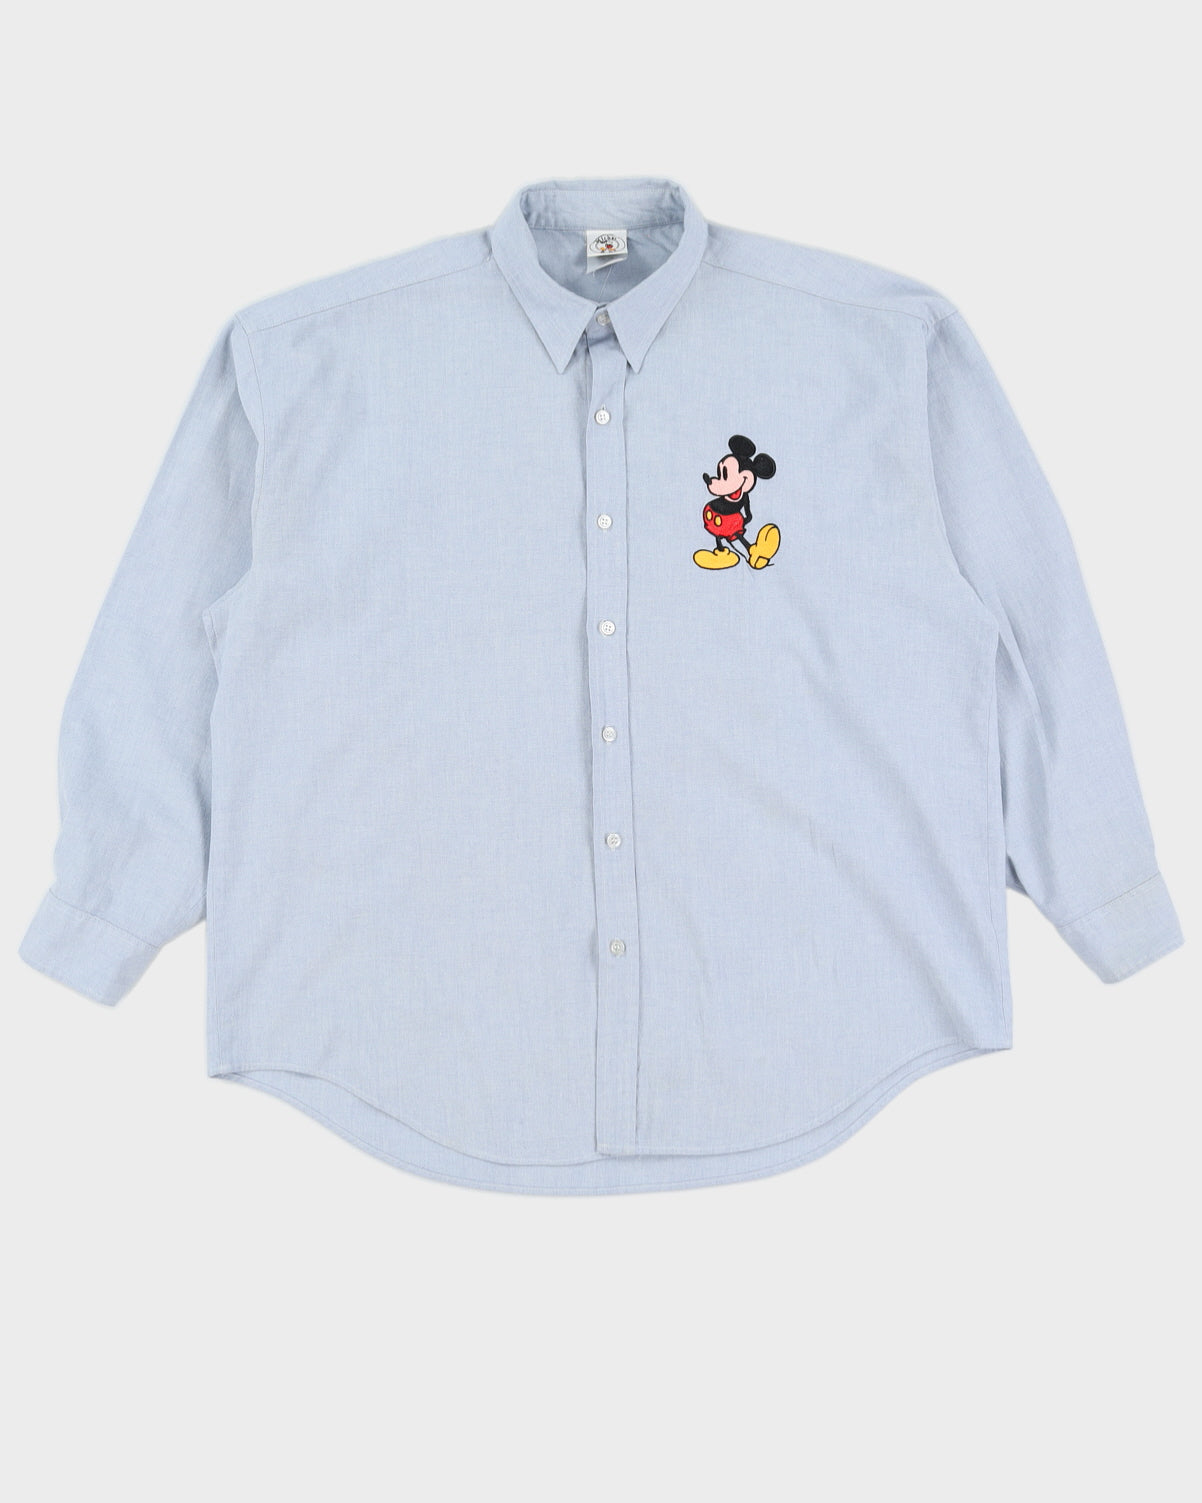 Vintage 90s Mickey & Co Shirt - L